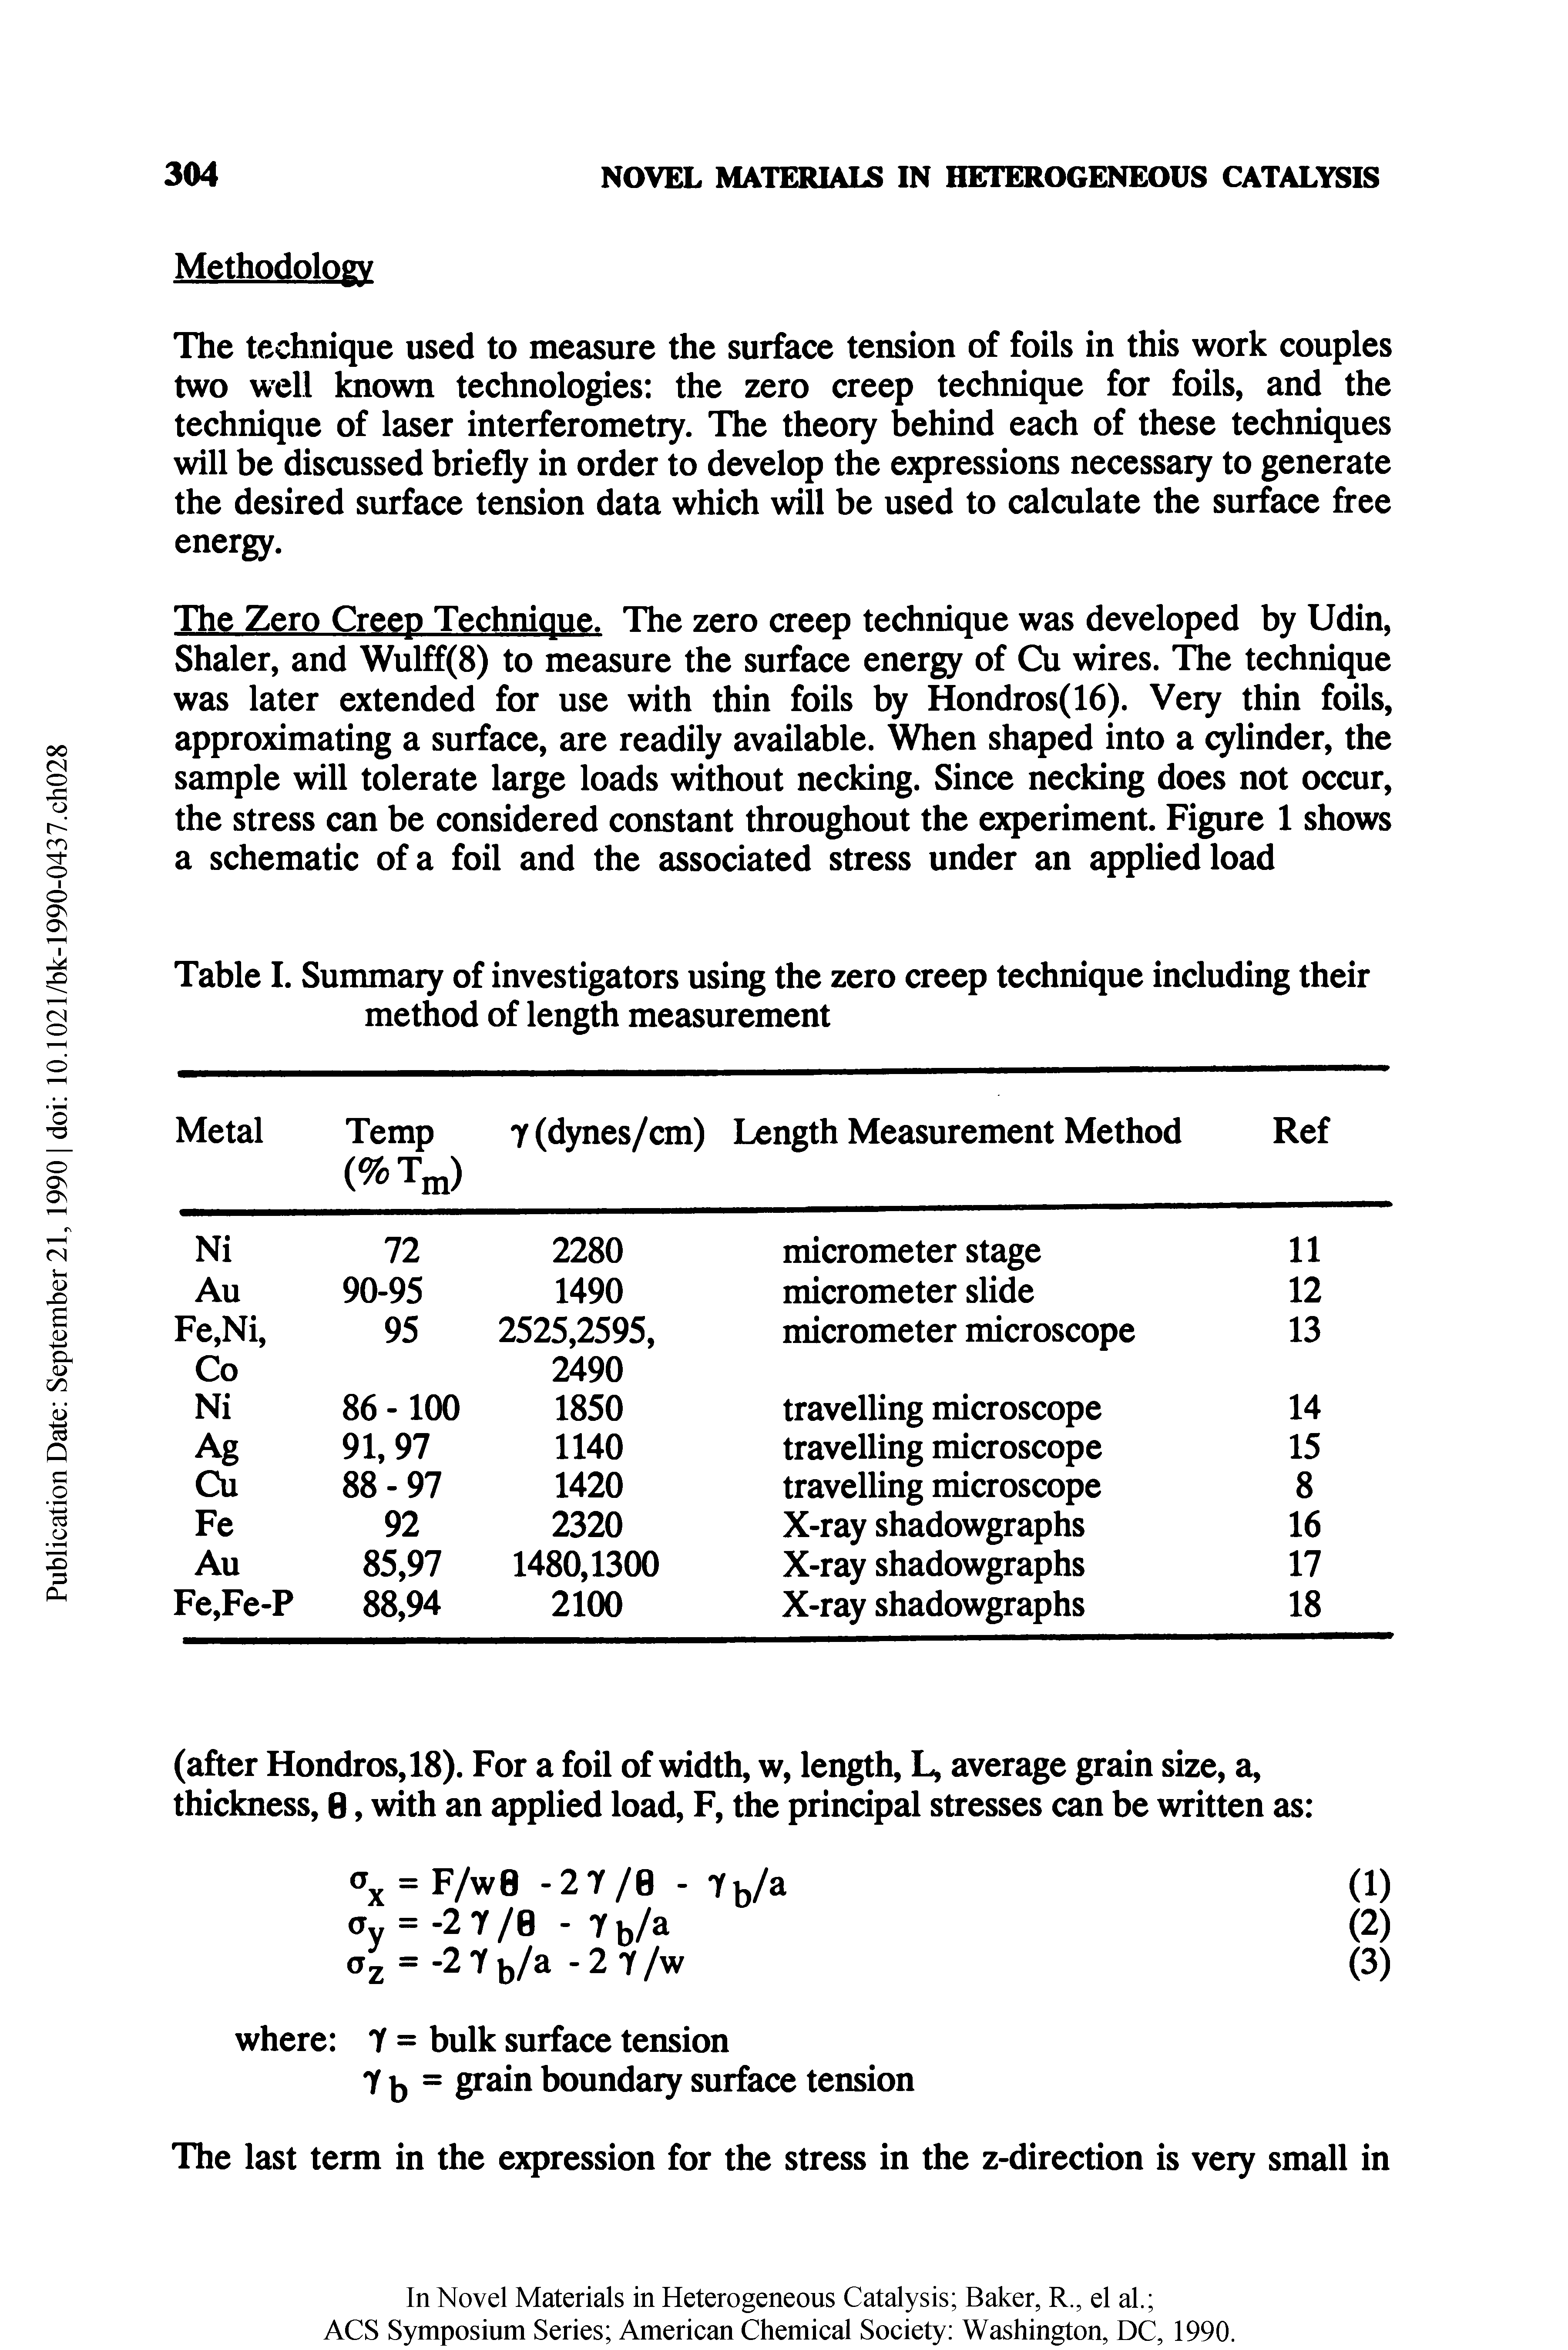 Table I. Summary of investigators using the zero creep technique including their method of length measurement...